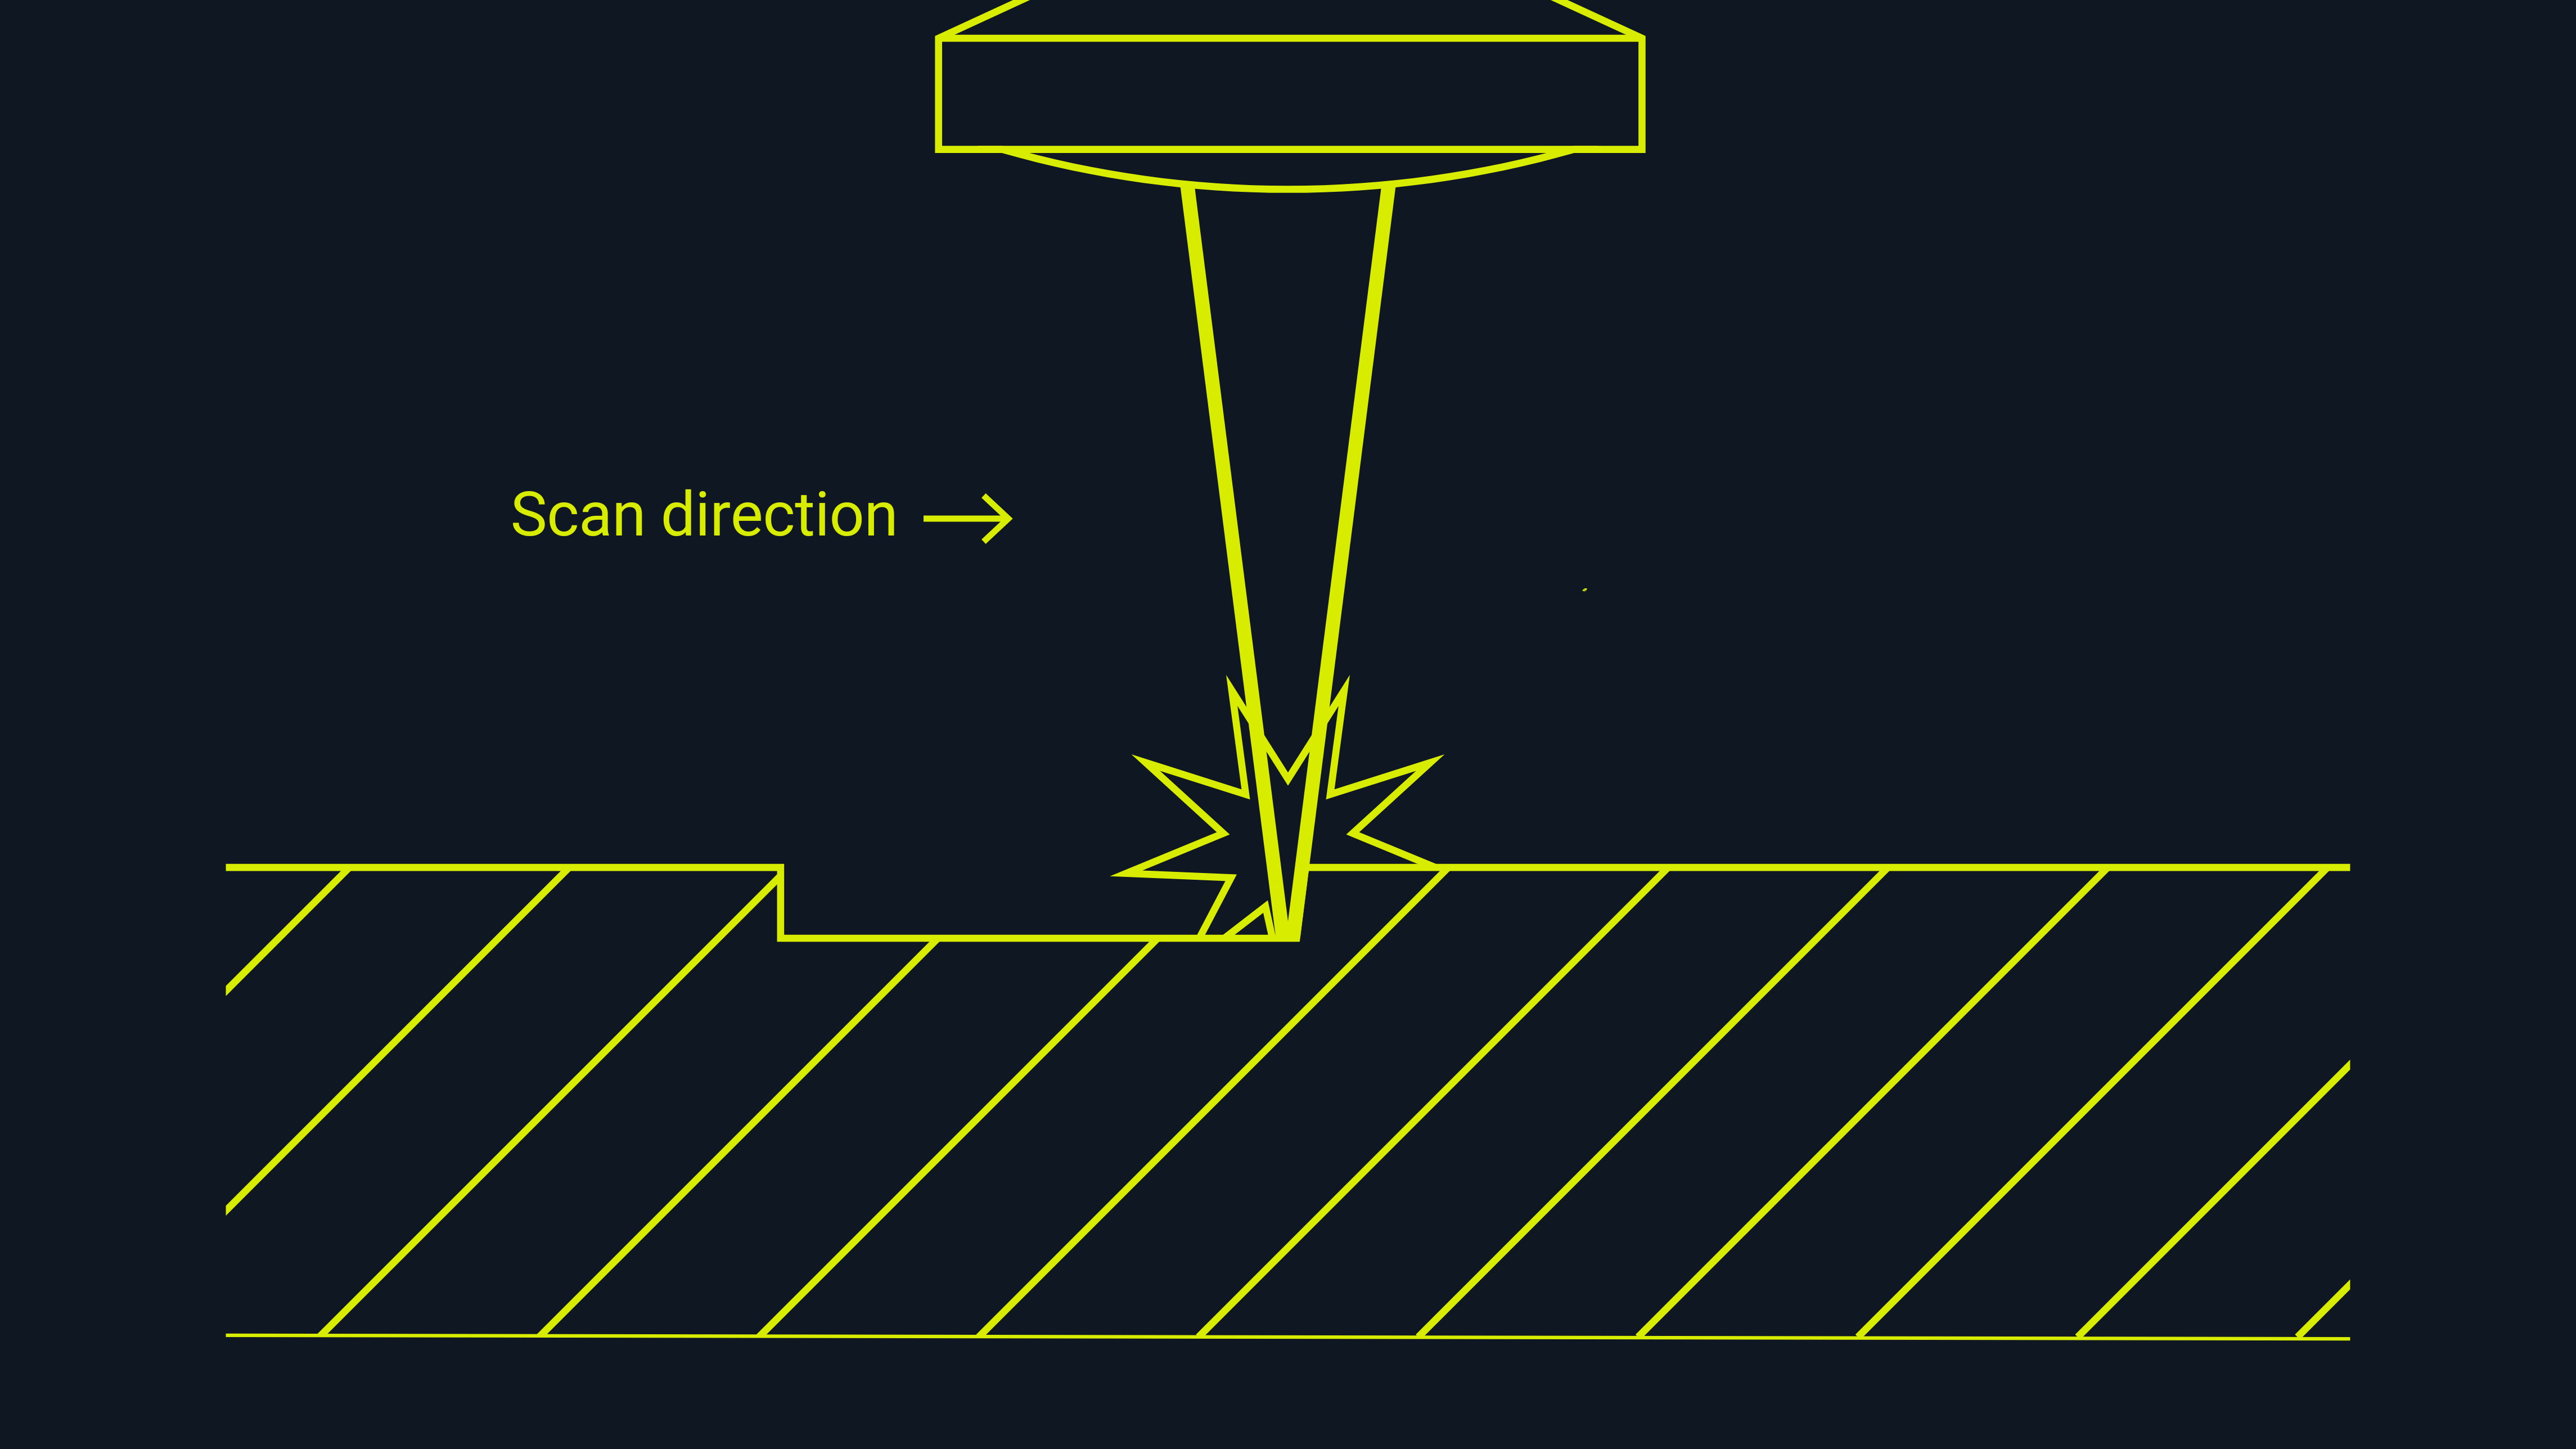 Sketched illustration of the laser engraving process.